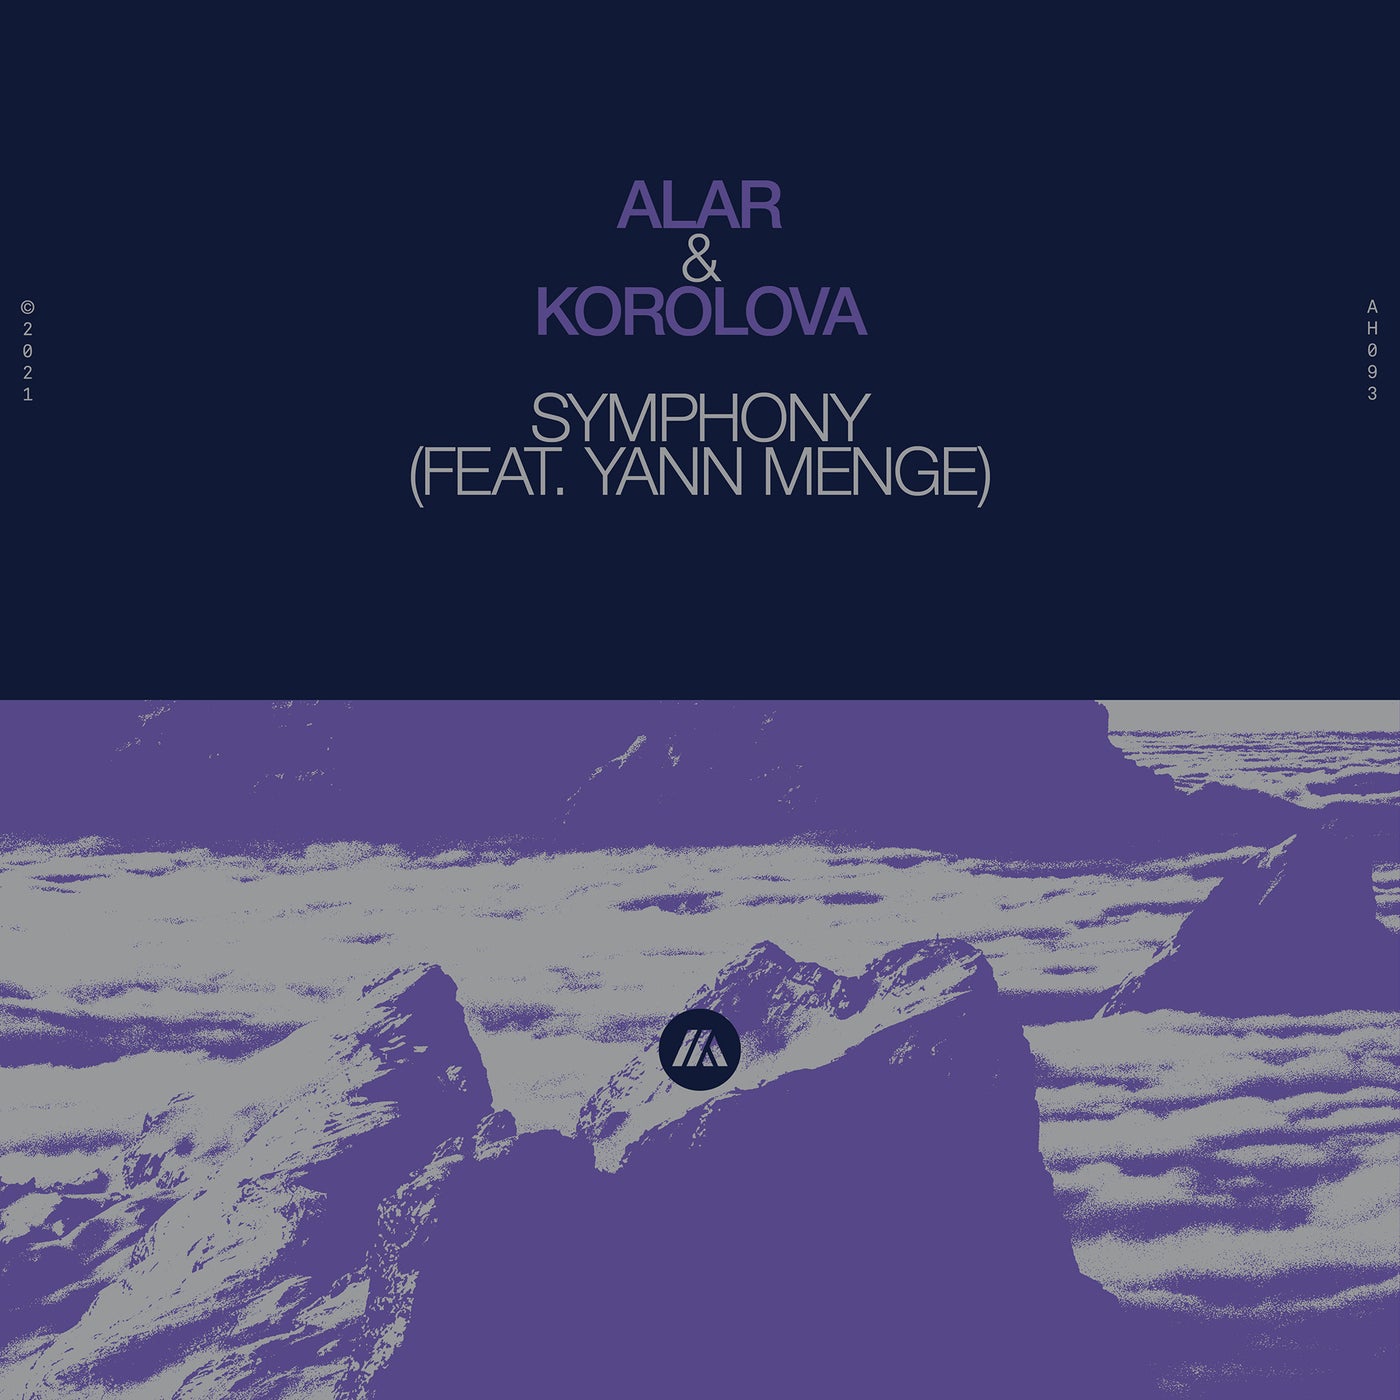 Alar And Korolova - Symphony Feat. Yann Menge (extended Mix) on Revolution Radio